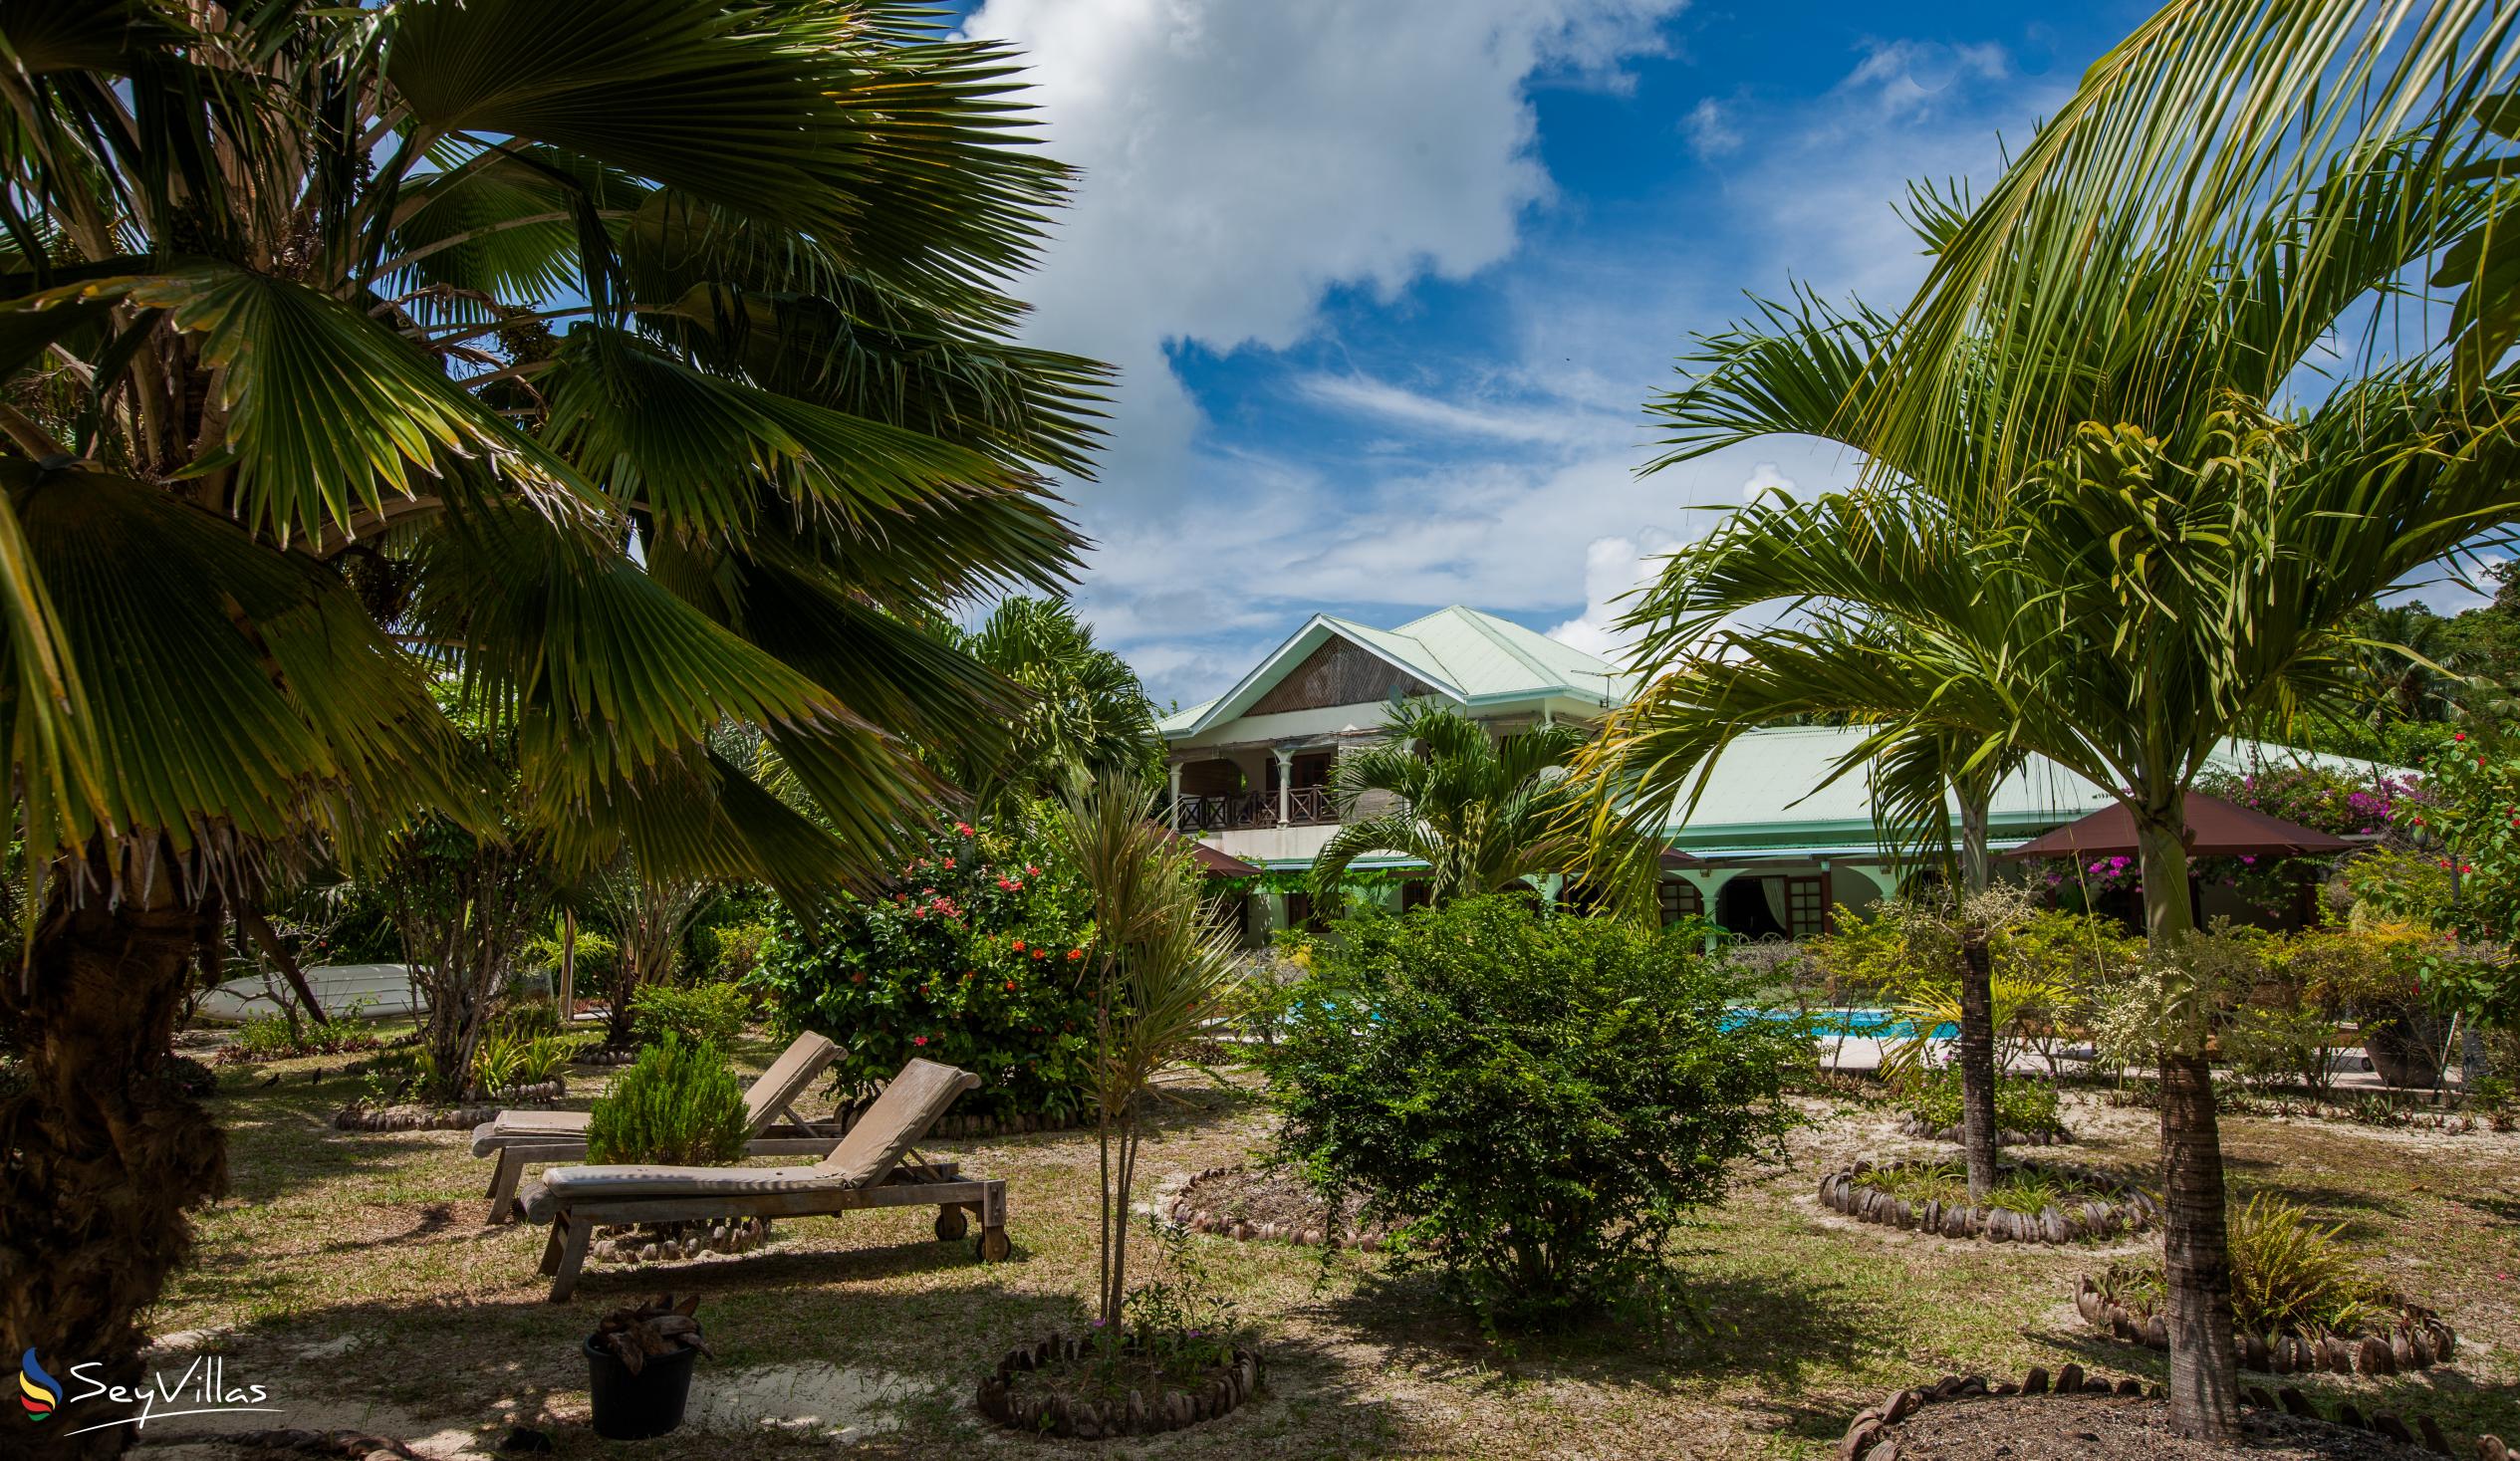 Photo 11: Villa de Cerf - Outdoor area - Cerf Island (Seychelles)